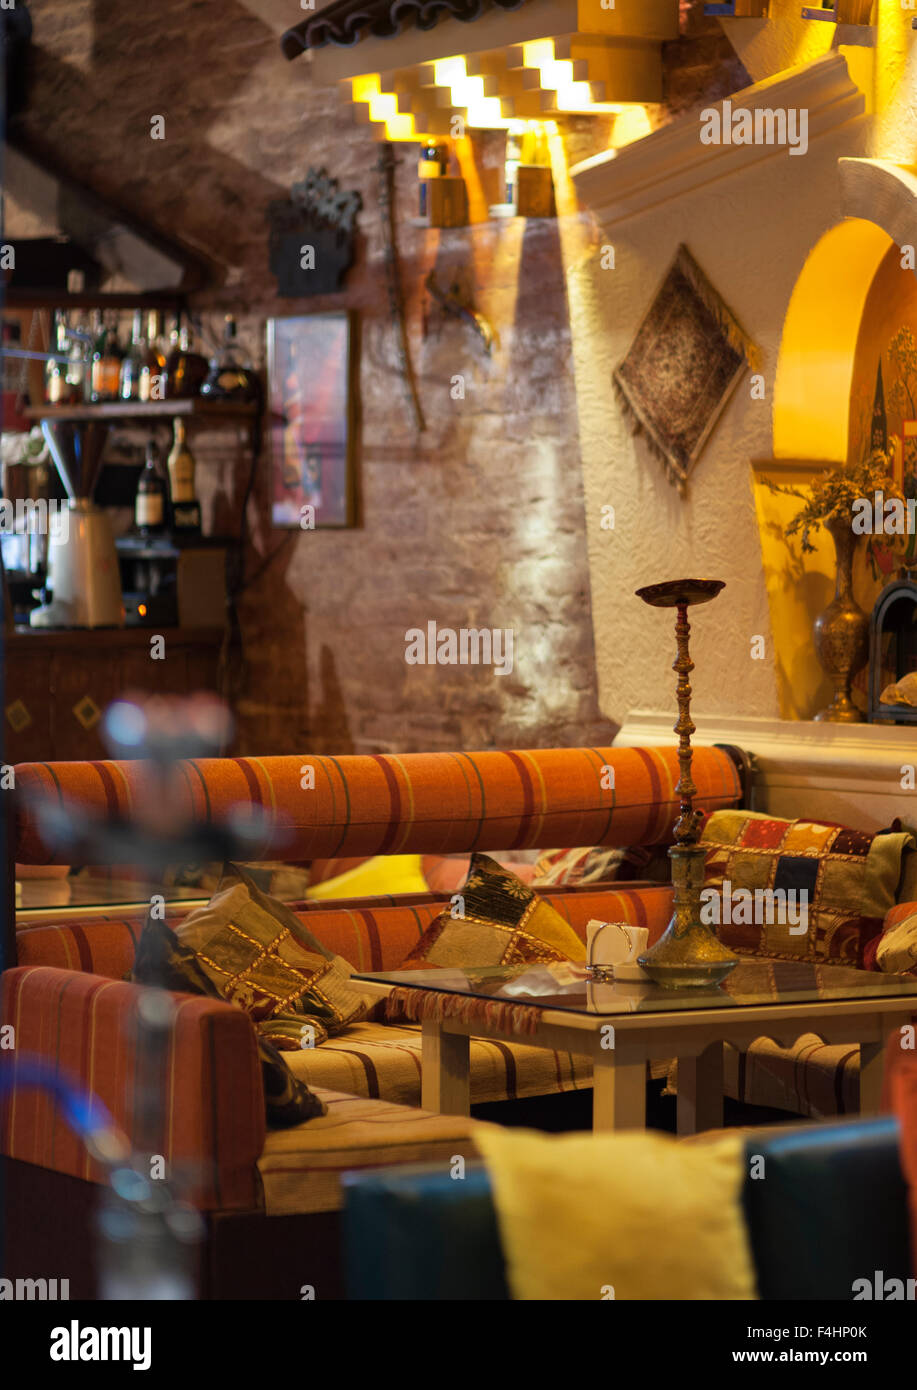 The best Georgian and European cuisine Marani Restaurant & Bar Old